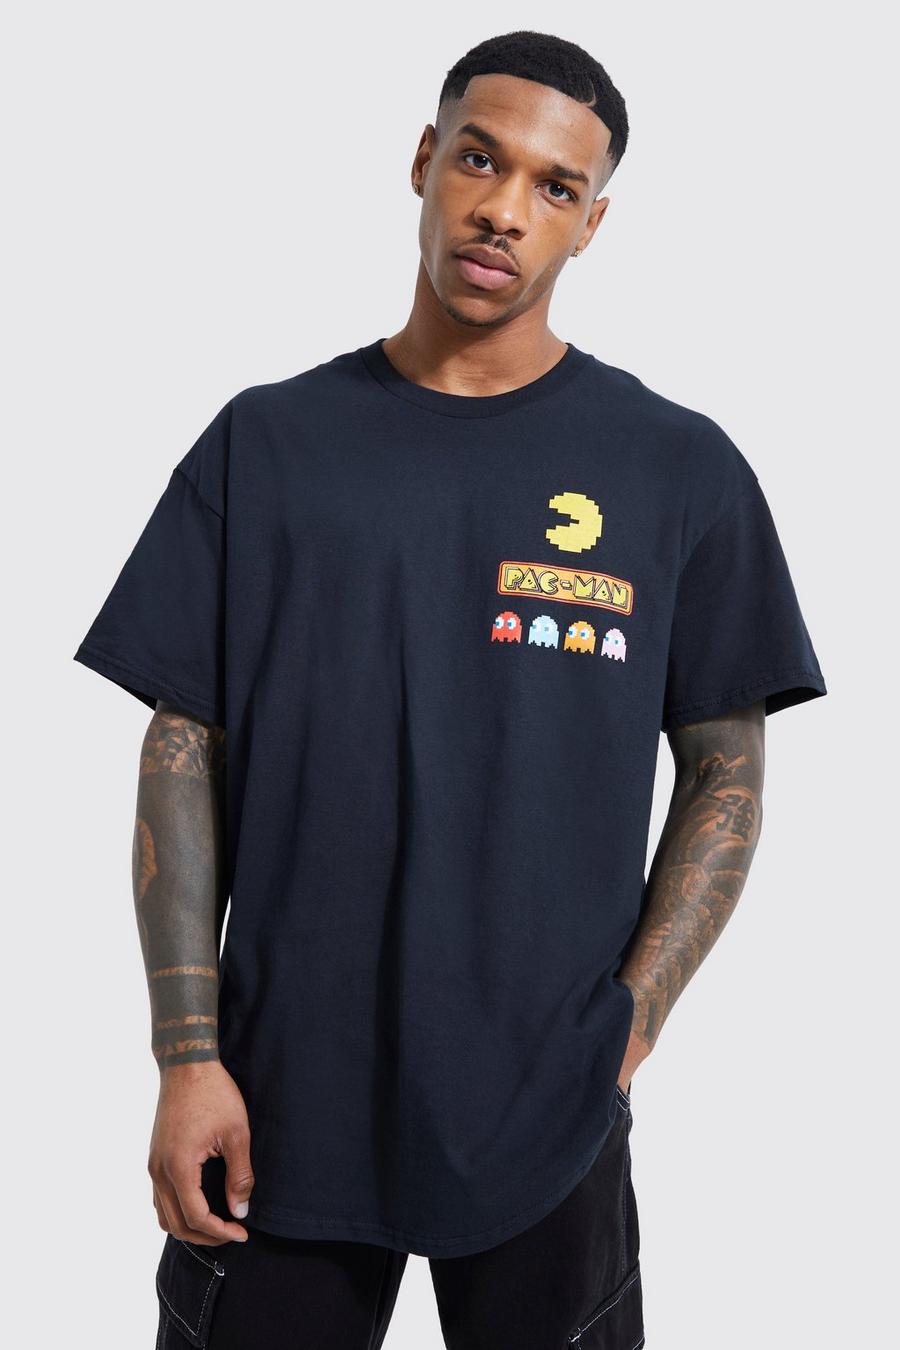 Black Oversized Pacman License T-shirt